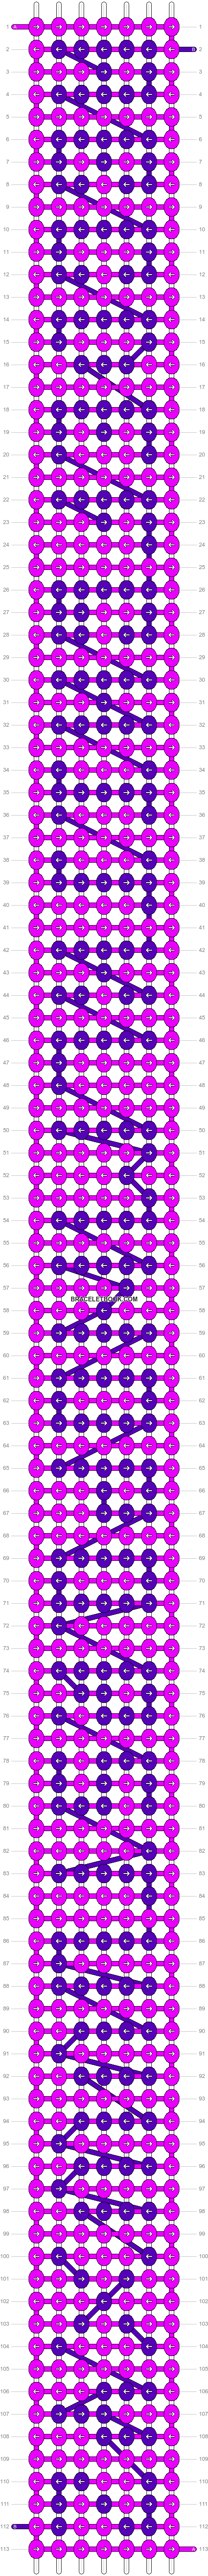 Alpha pattern #46779 variation #77086 pattern